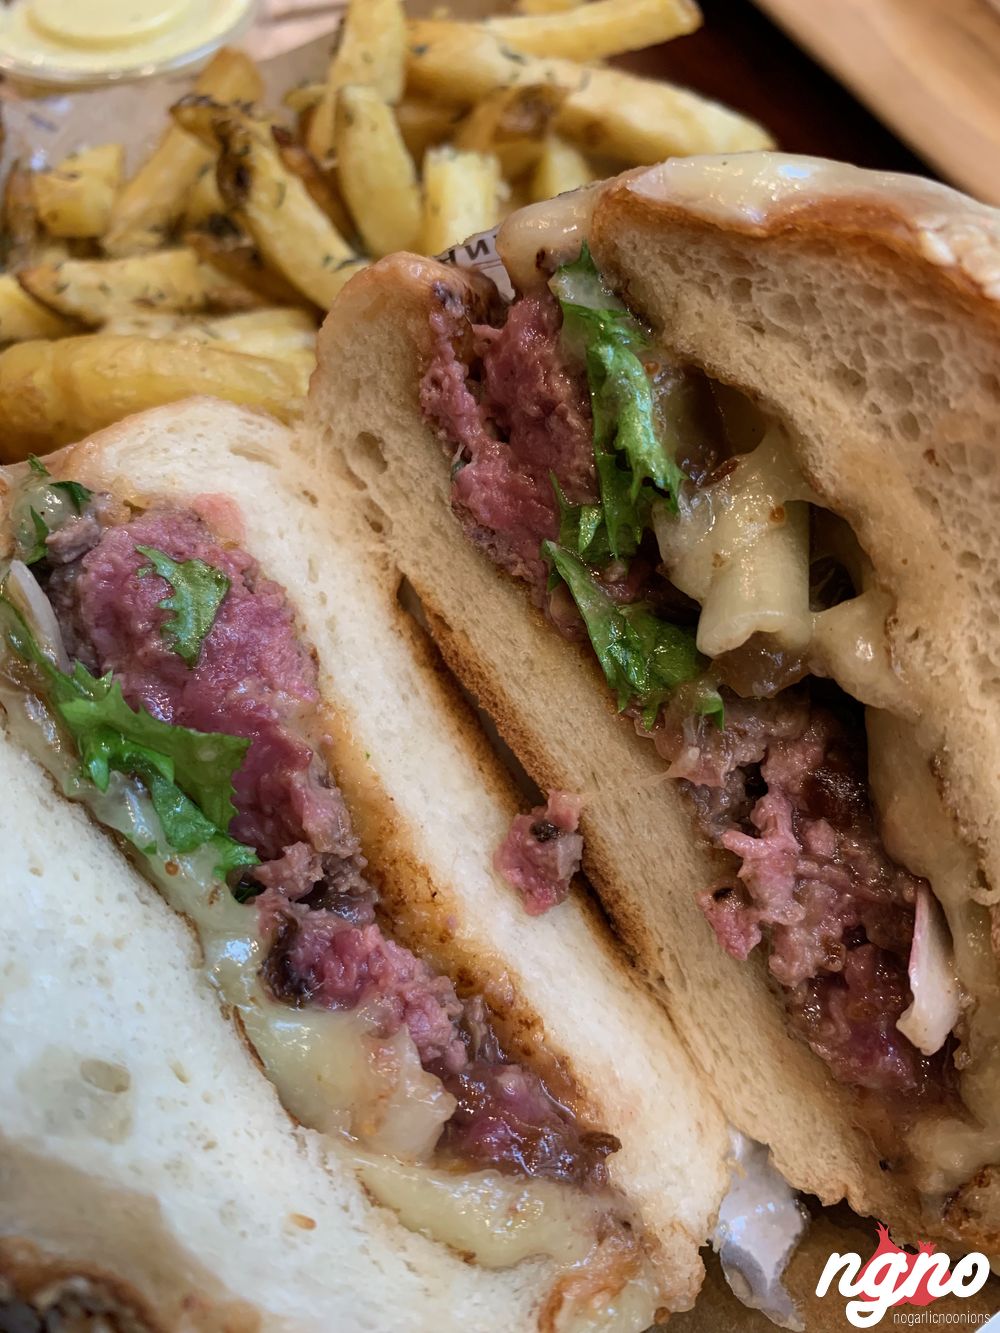 canard-street-burger-paris-nogarlicnoonions-12018-12-24-10-20-46